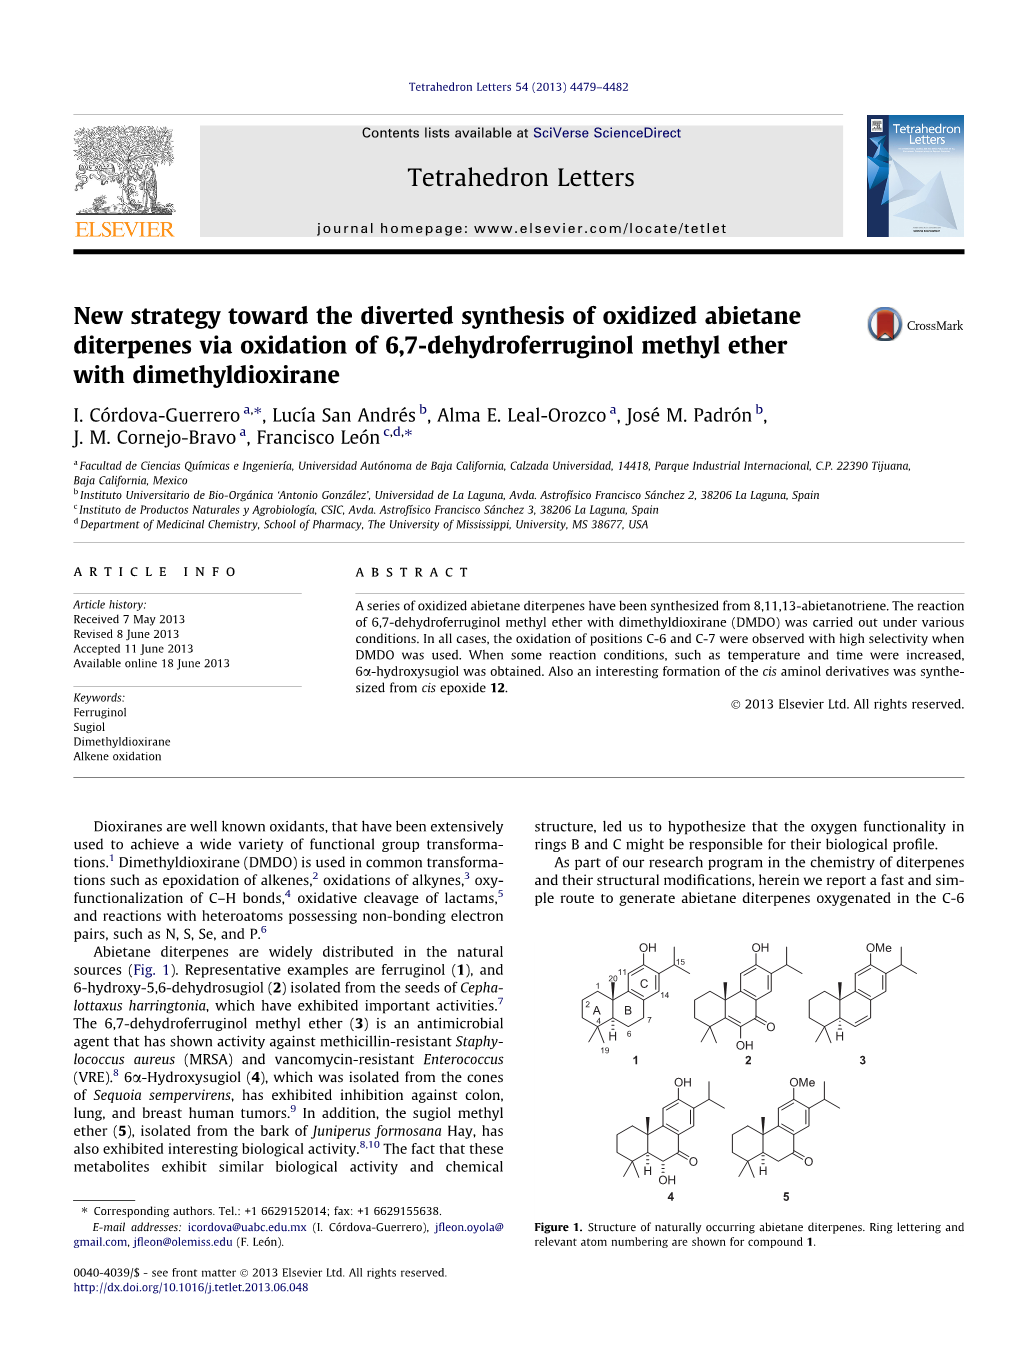 New Strategy Toward the Diverted Synthesis of Oxidized Abietane Diterpenes Via Oxidation of 6,7-Dehydroferruginol Methyl Ether with Dimethyldioxirane ⇑ I